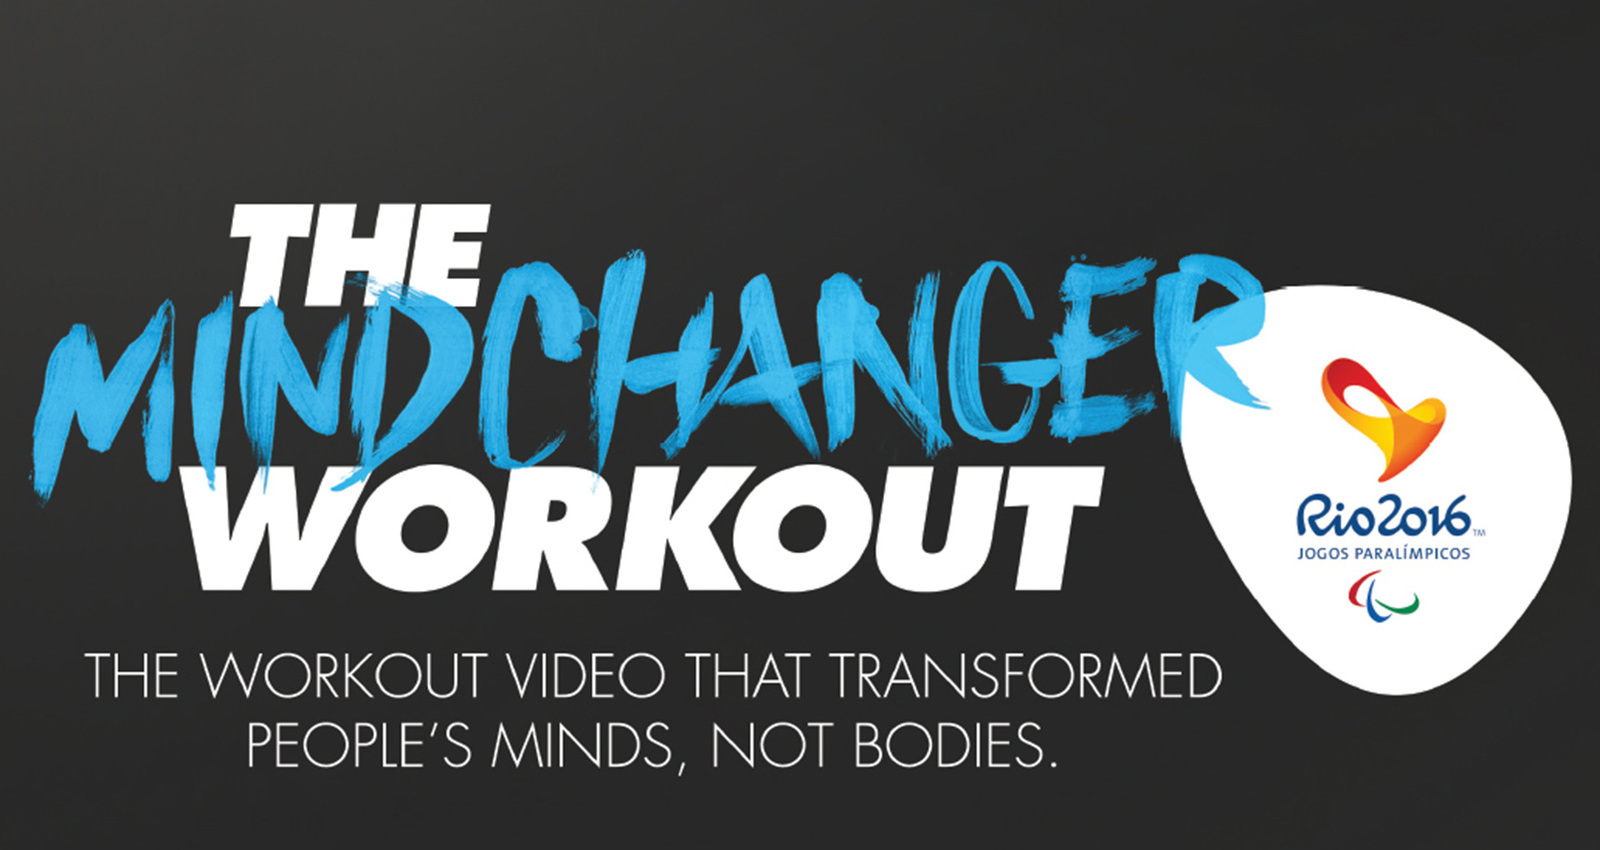 The Mindchanger Workout